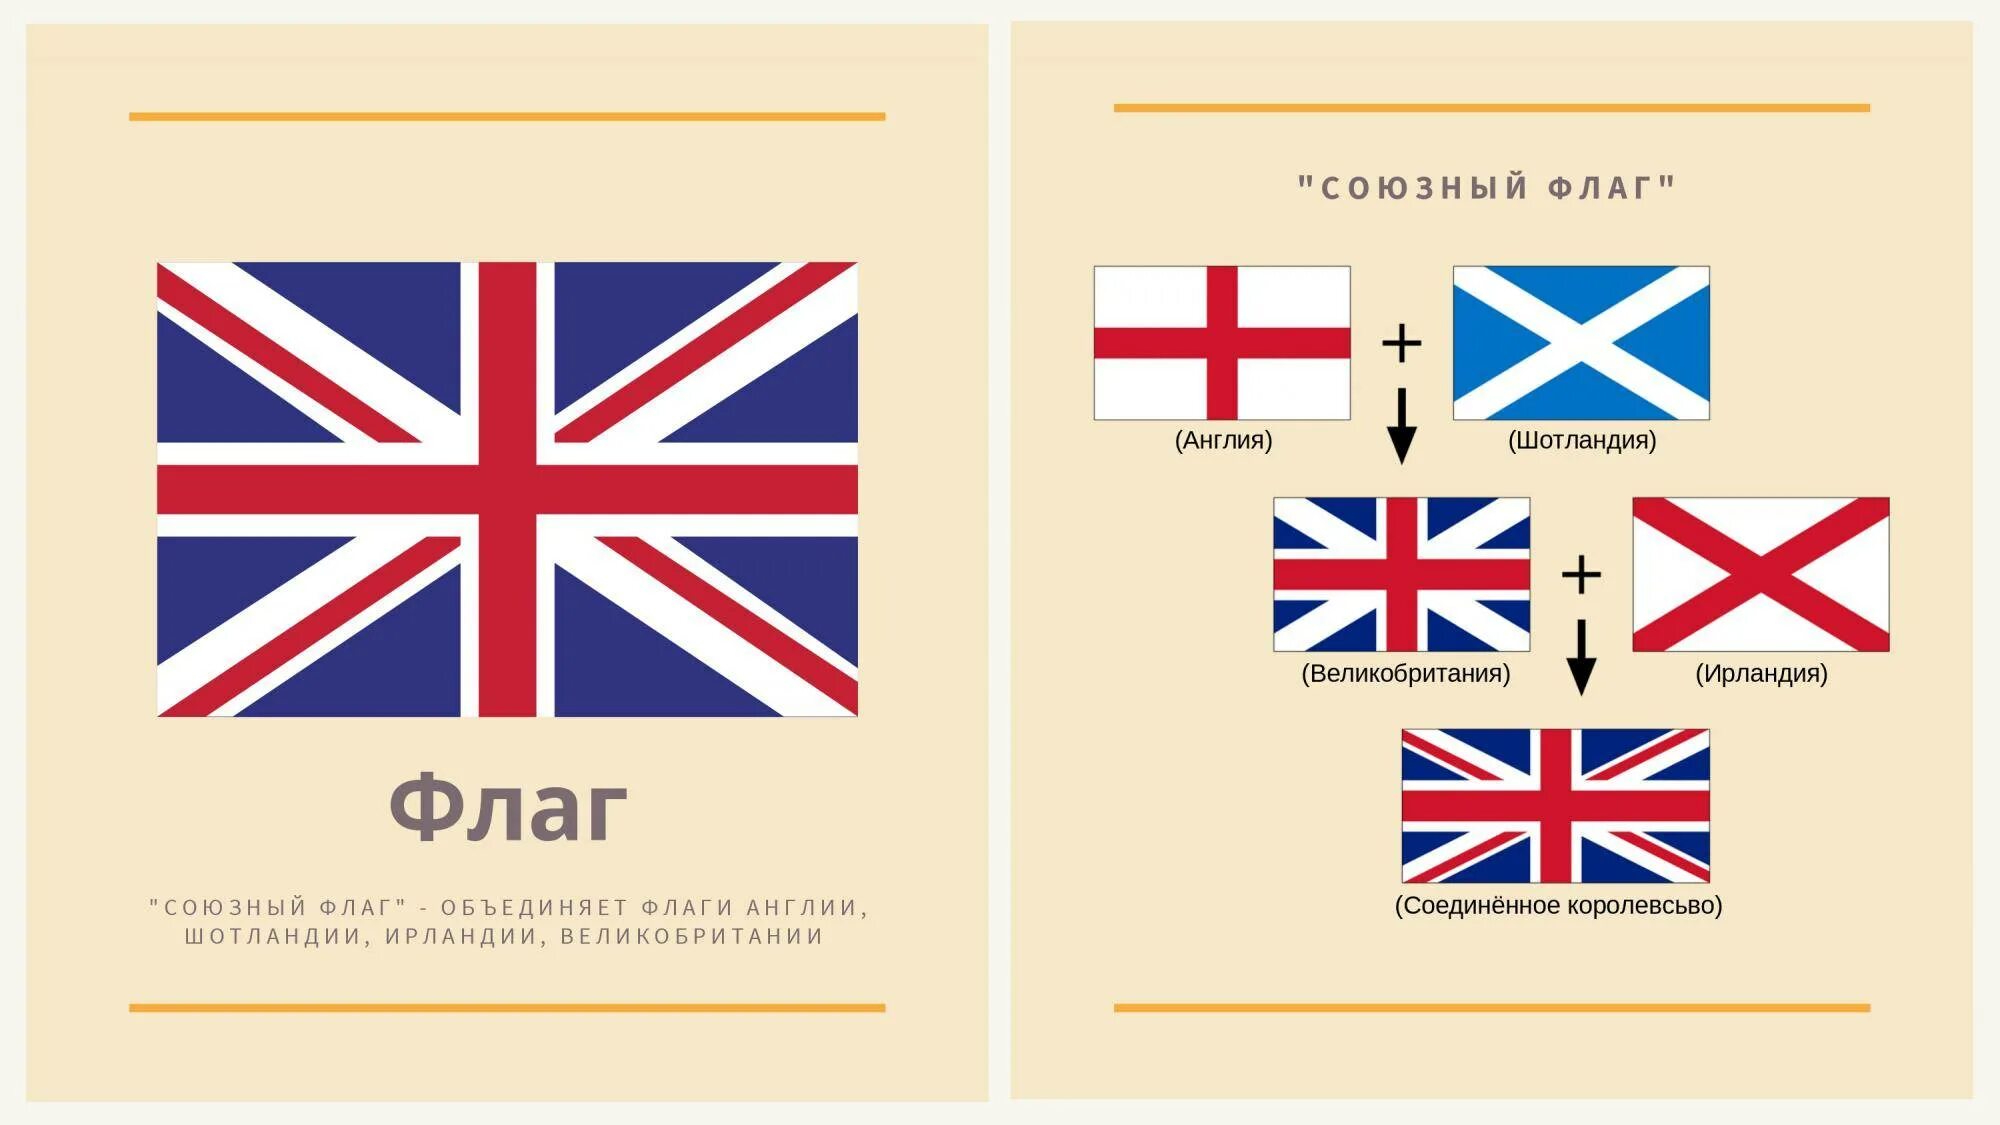 Почему флаг англии. Состав флага Великобритании. Эволюция флага Великобритании. Флаг Великобритании возникновение. История флага Англии история флага Англии.